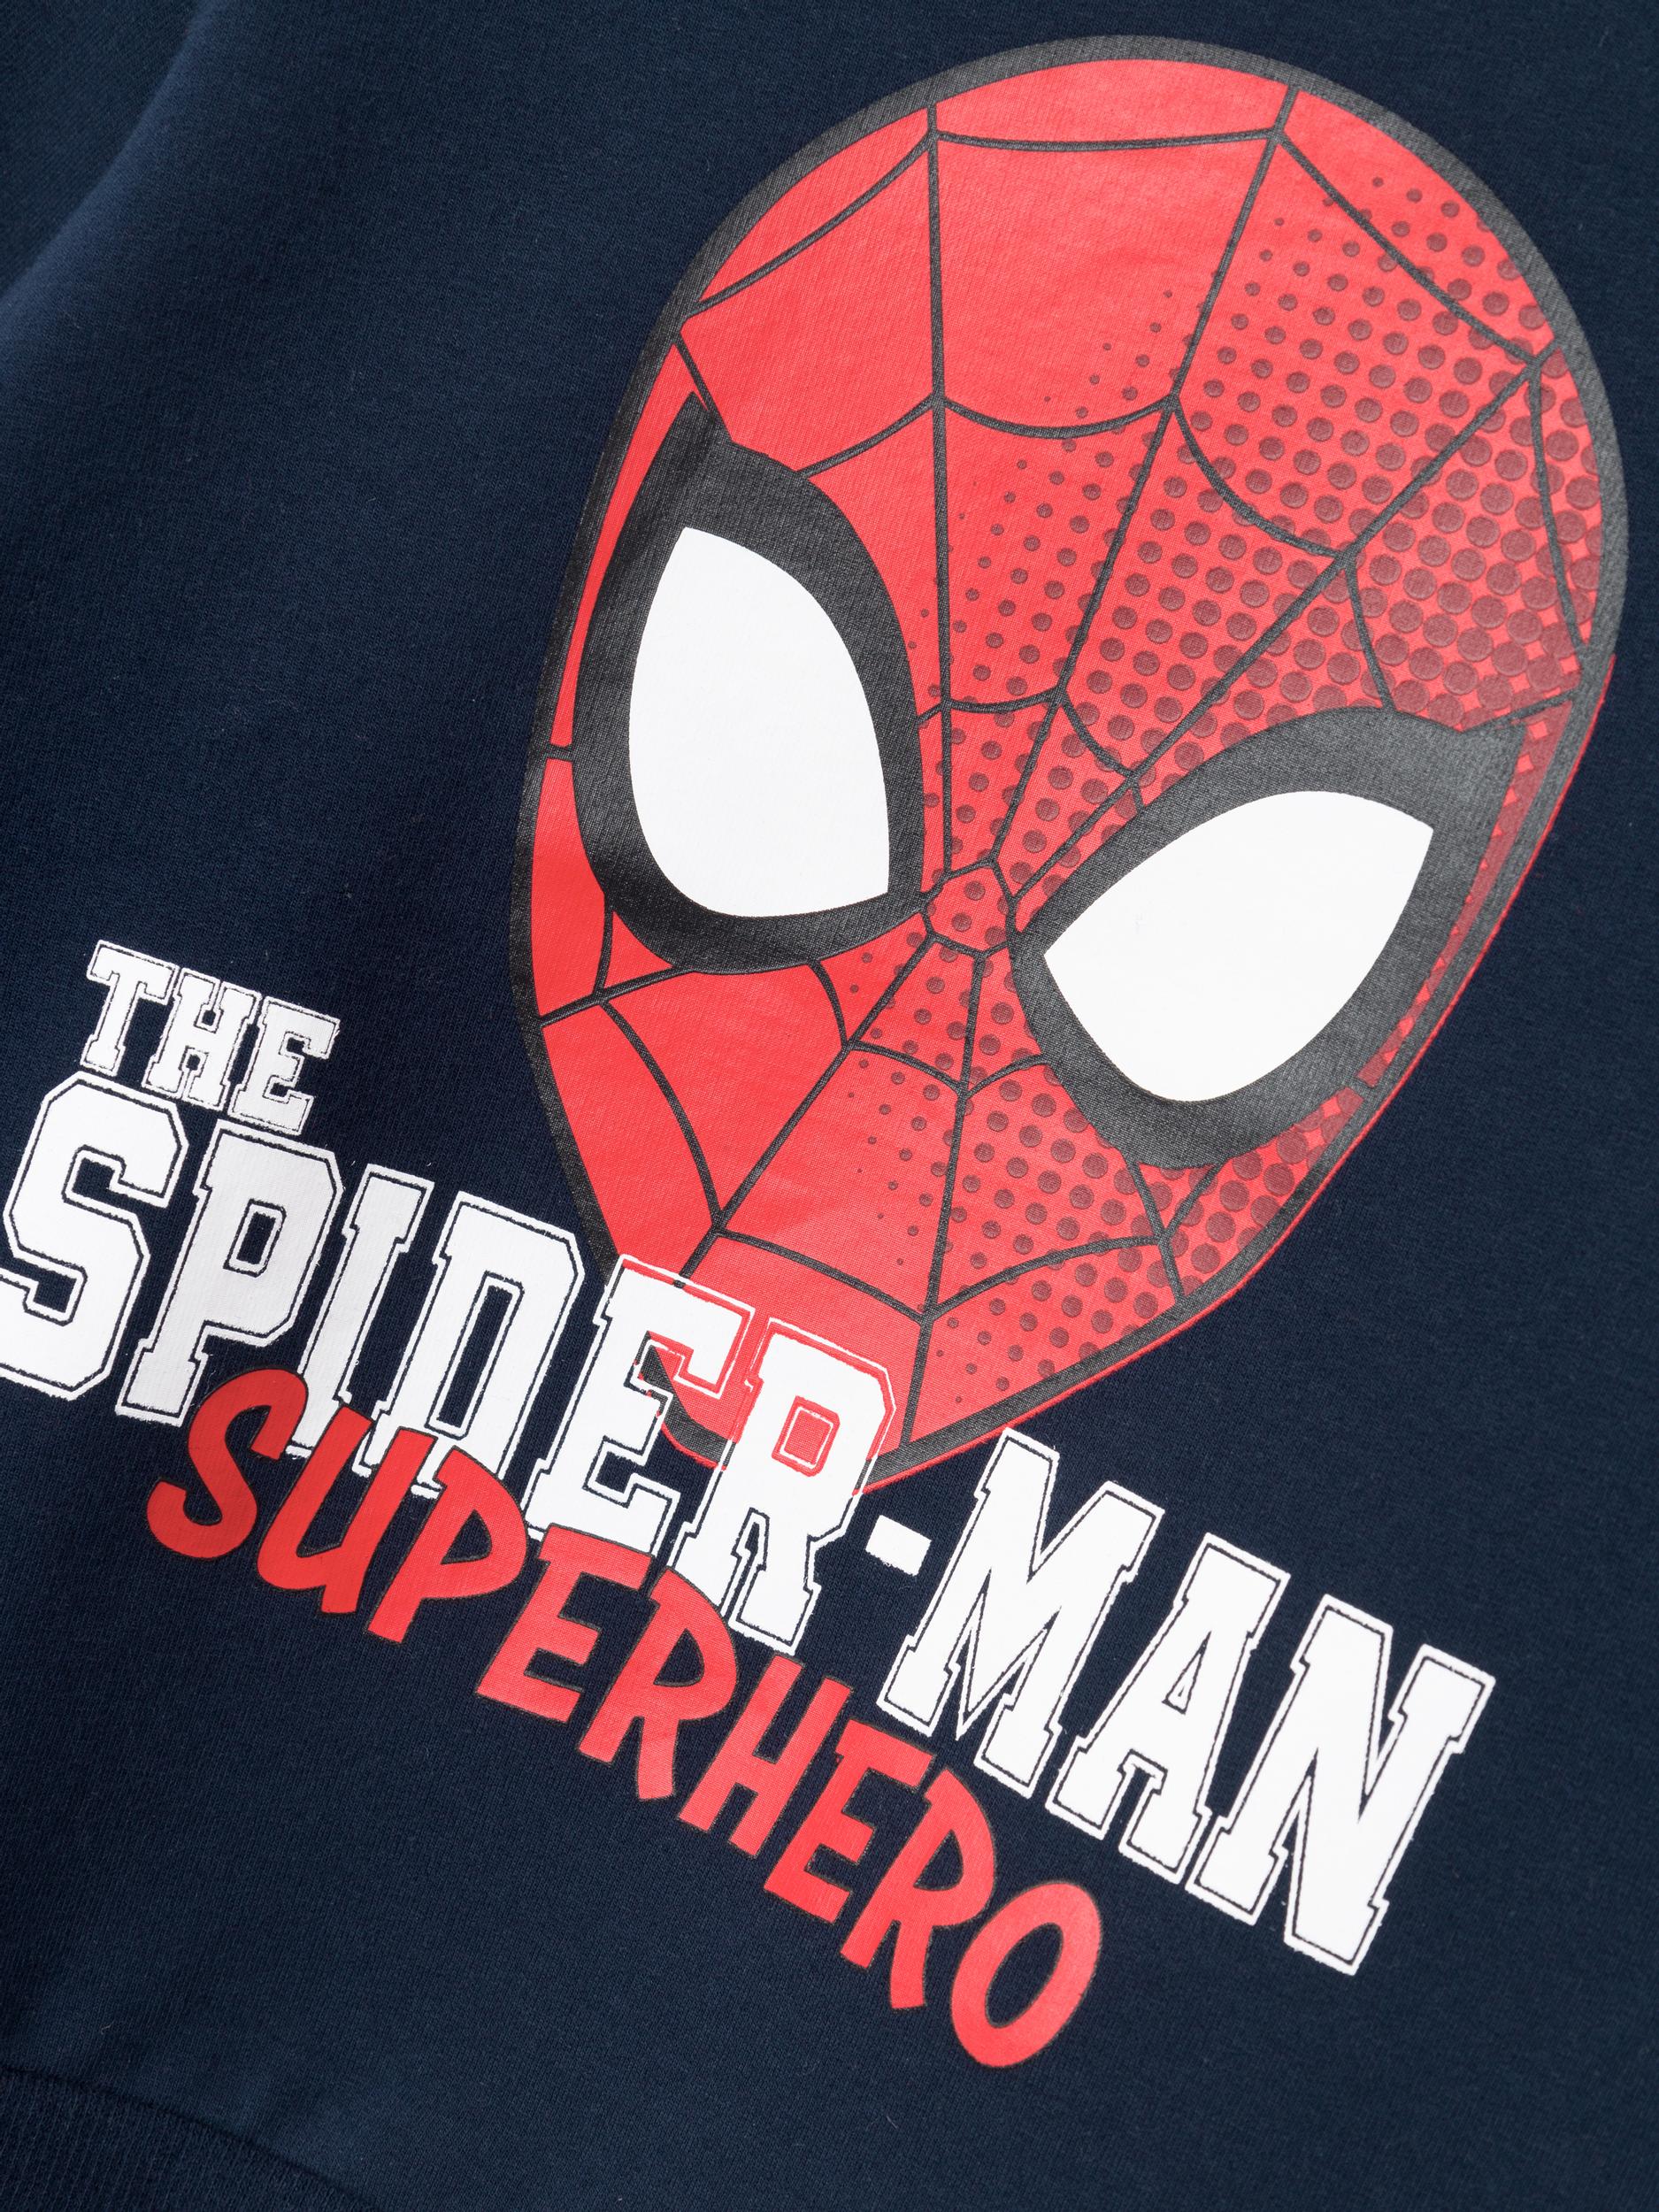 Name it Sweatshirt Nurit Spiderman LS